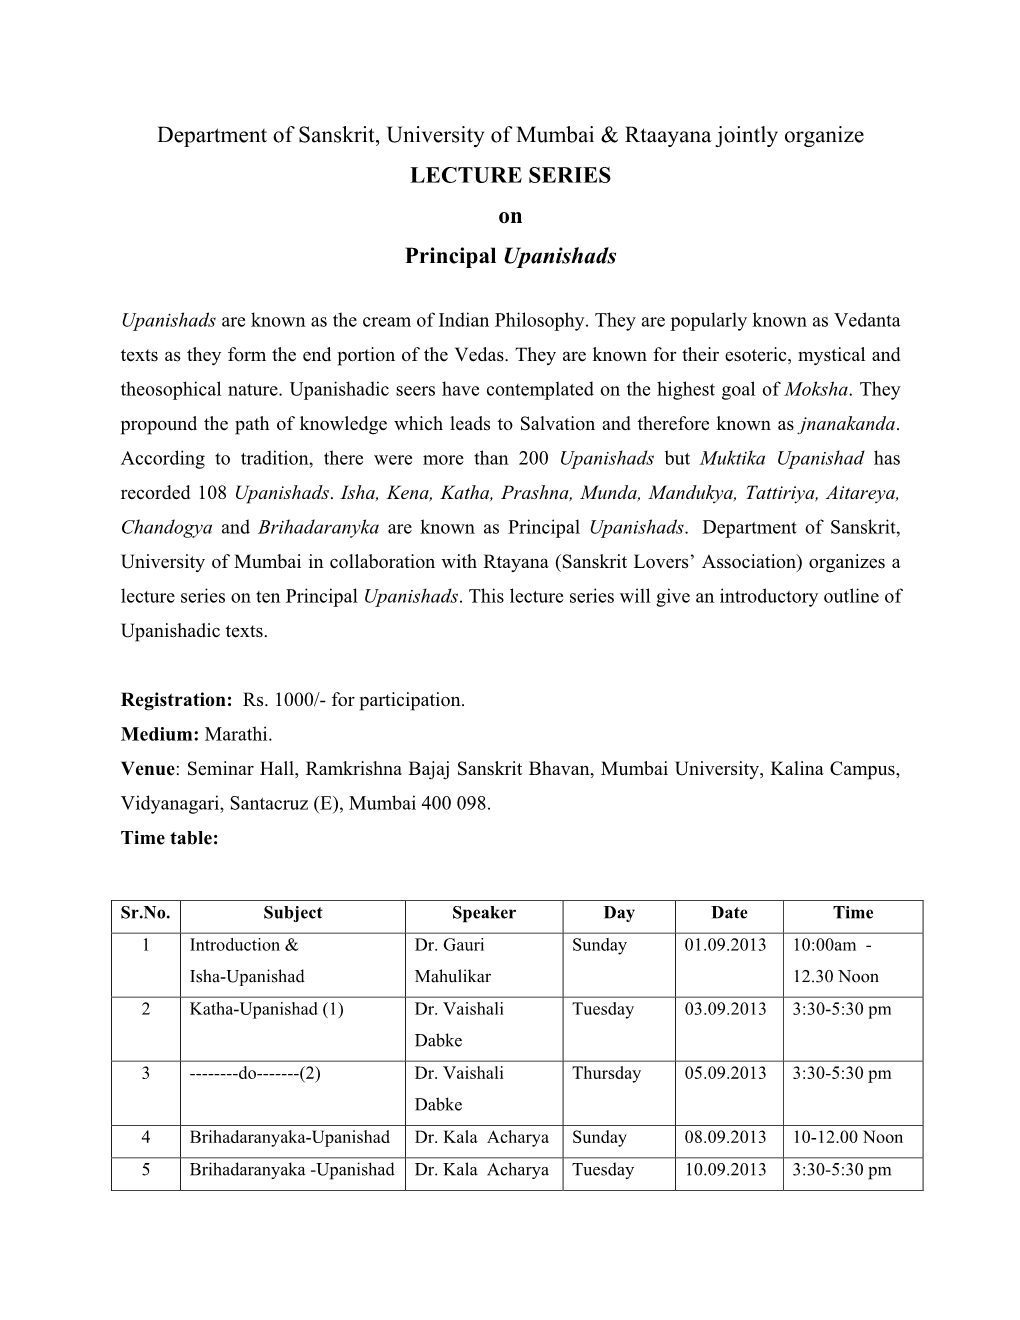 Department of Sanskrit, University of Mumbai & Rtaayana Jointly Organize LECTURE SERIES on Principal Upanishads